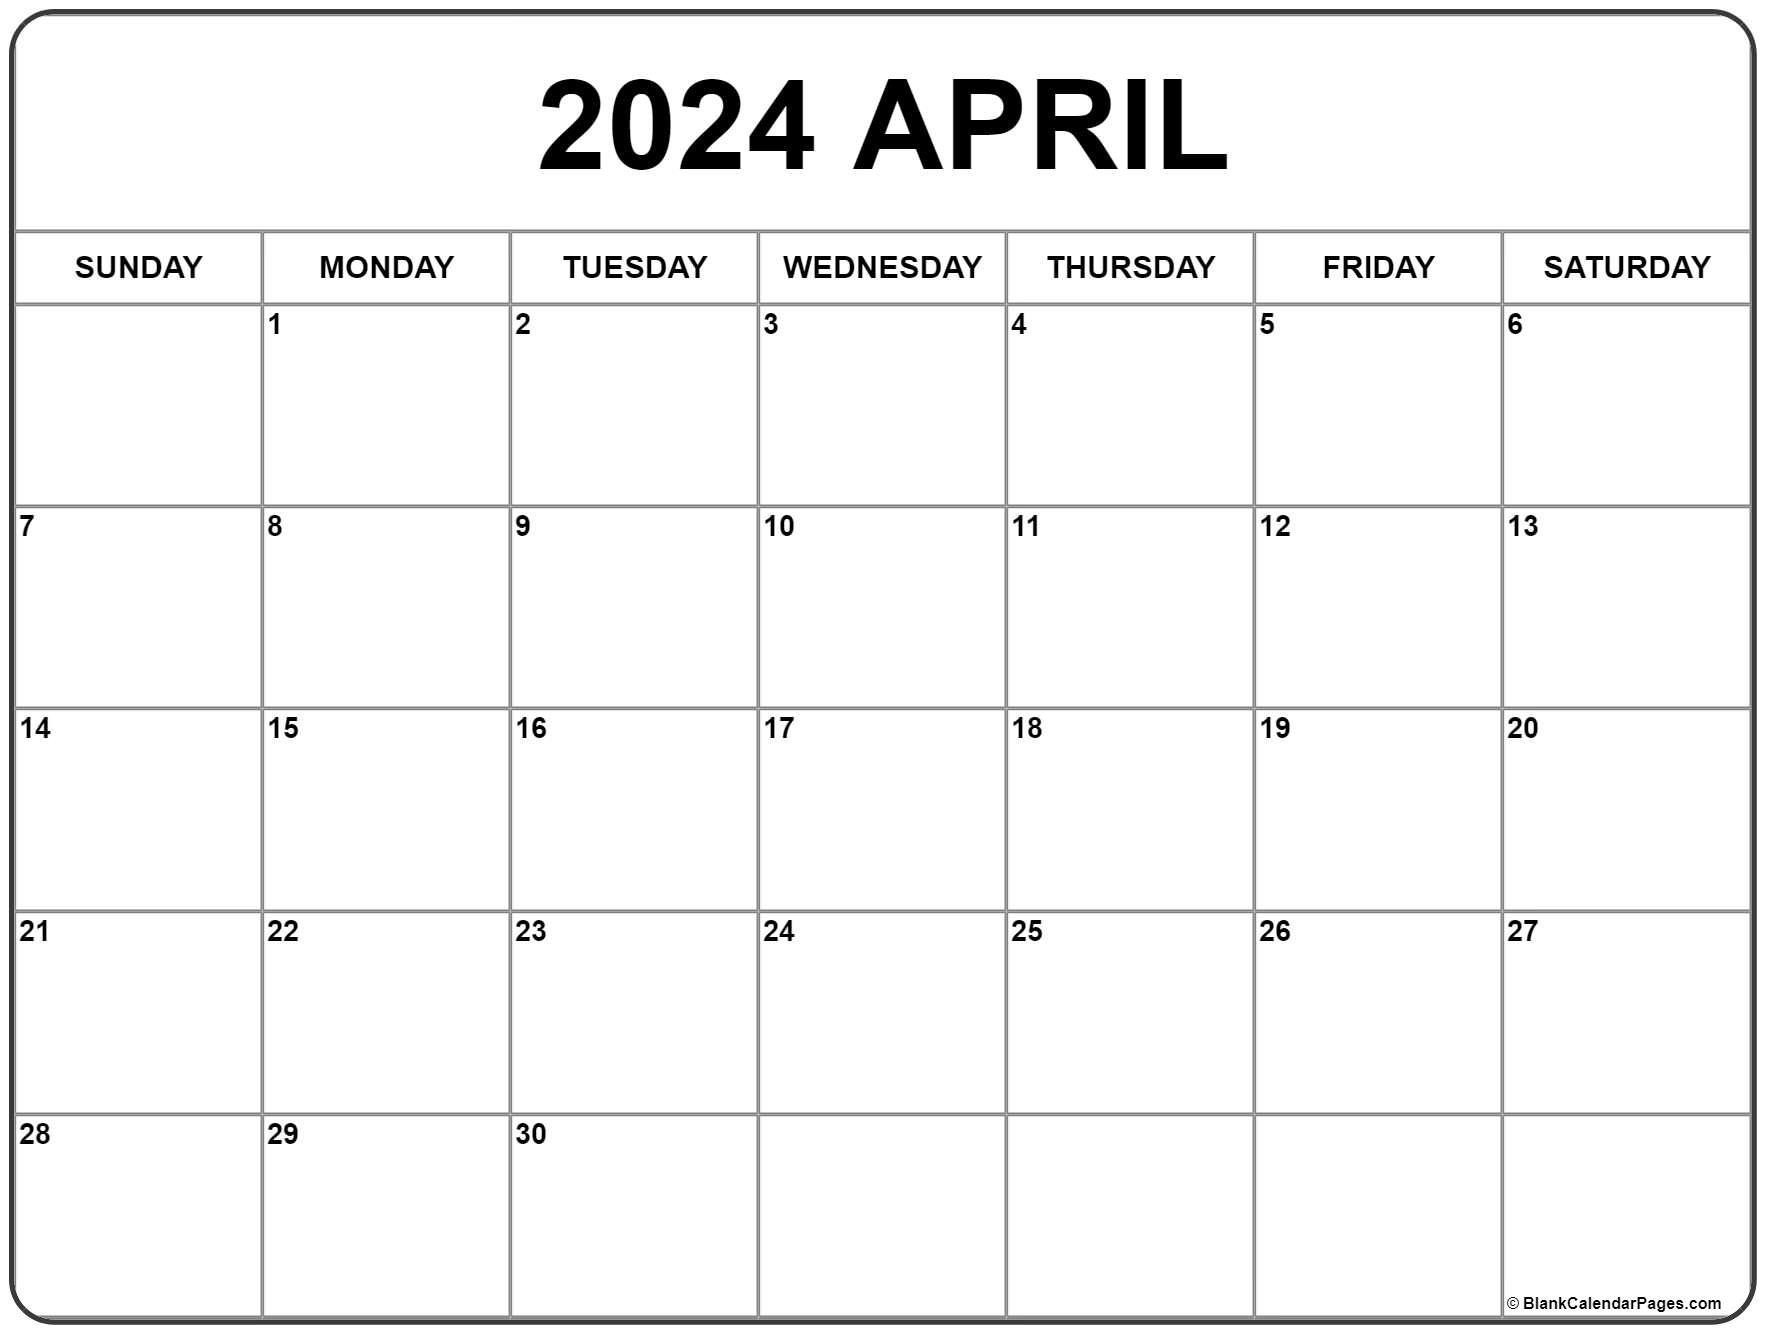 April 2024 Calendar | Free Printable Calendar intended for Google Calendar - April 2024